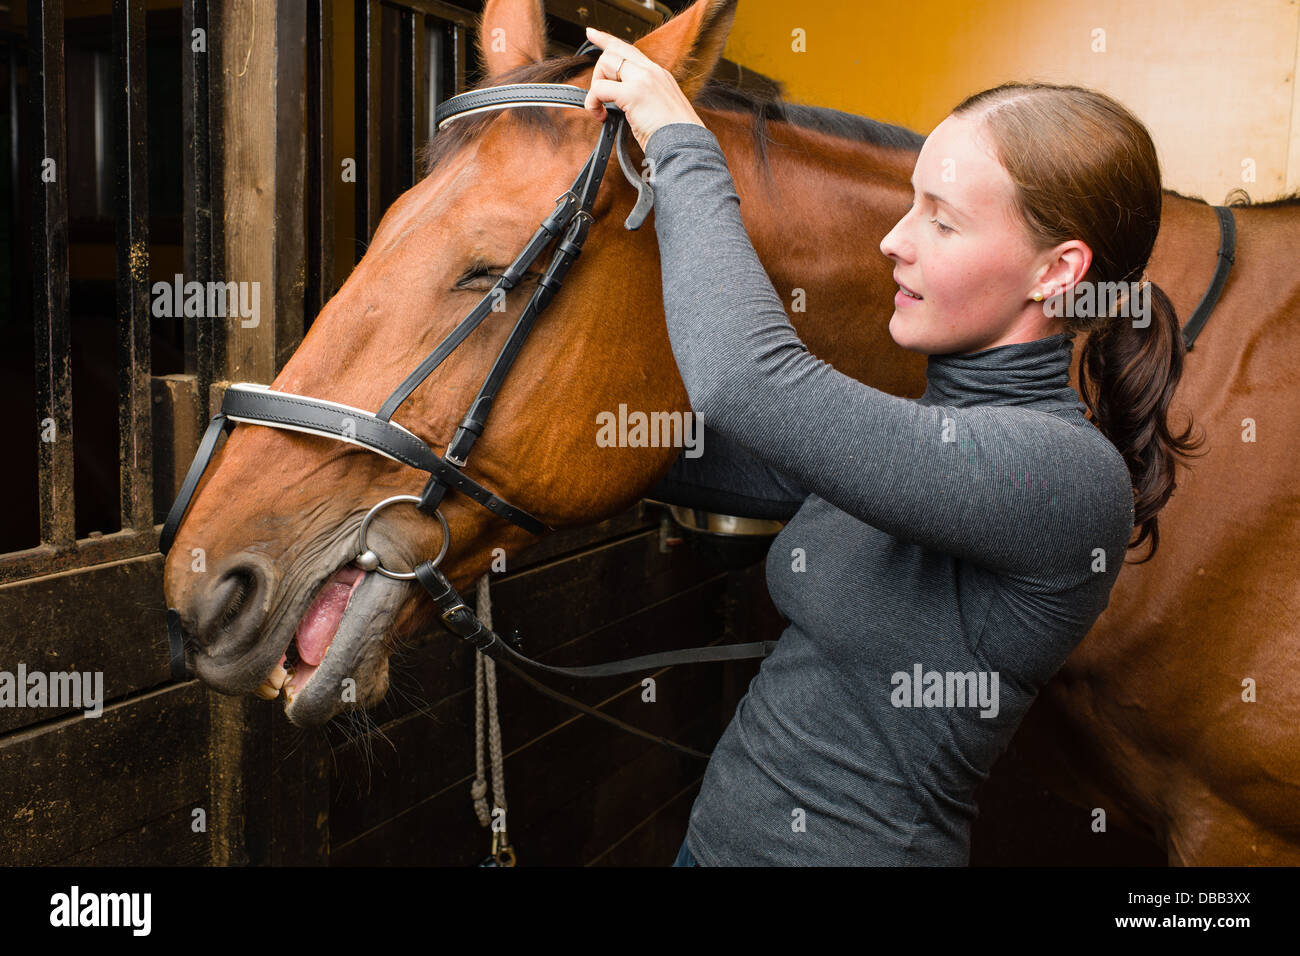 Bridle horse Stock Photo